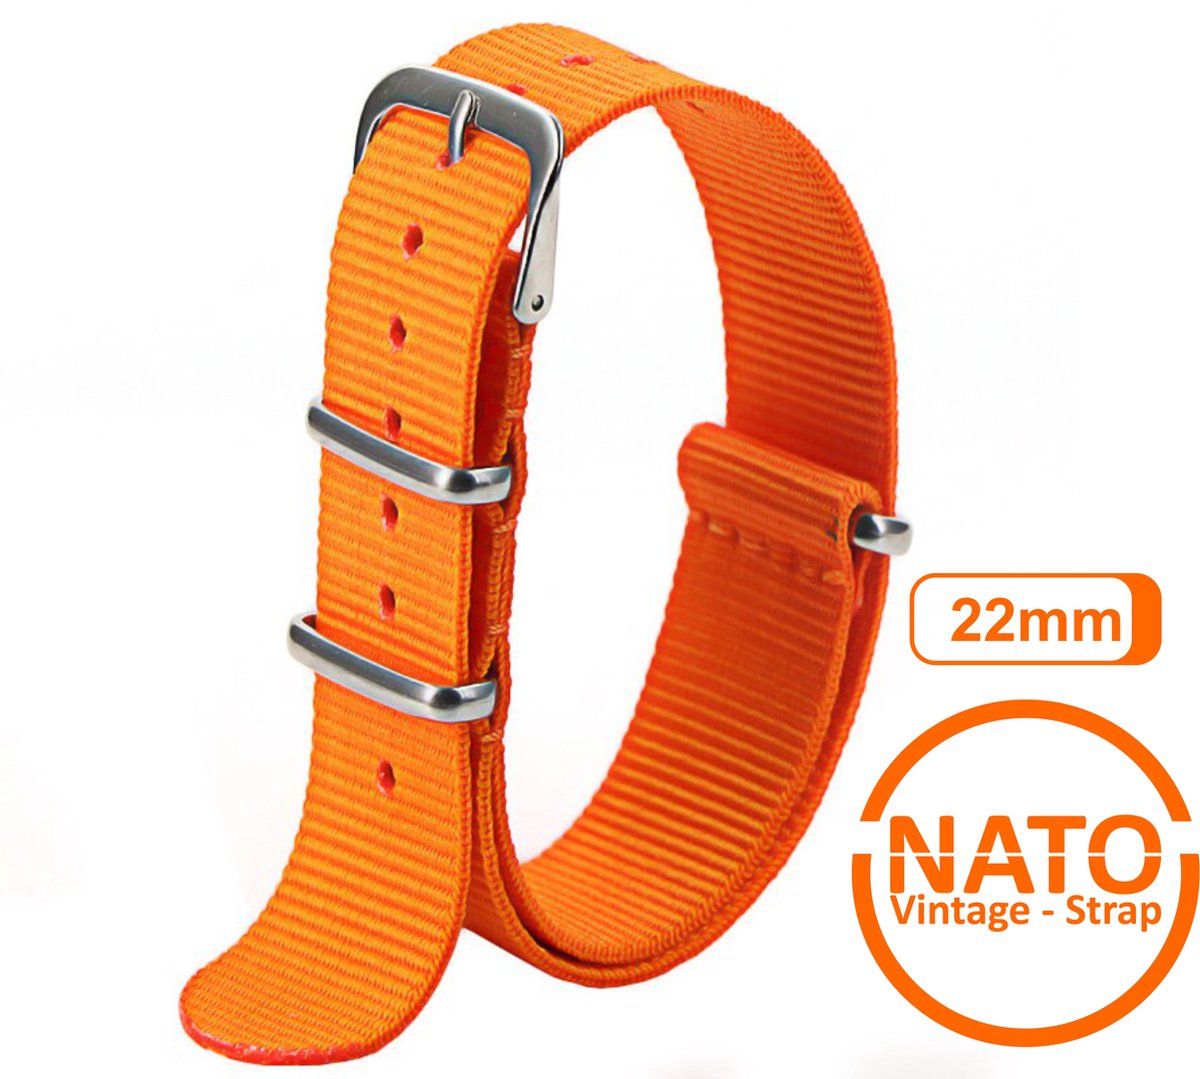 22mm Premium Nato Strap Oranje - Vintage James Bond - Nato Strap collectie - Mannen - Horlogeband - 22 mm bandbreedte voor oa. Seiko Rolex Omega Casio en Citizen